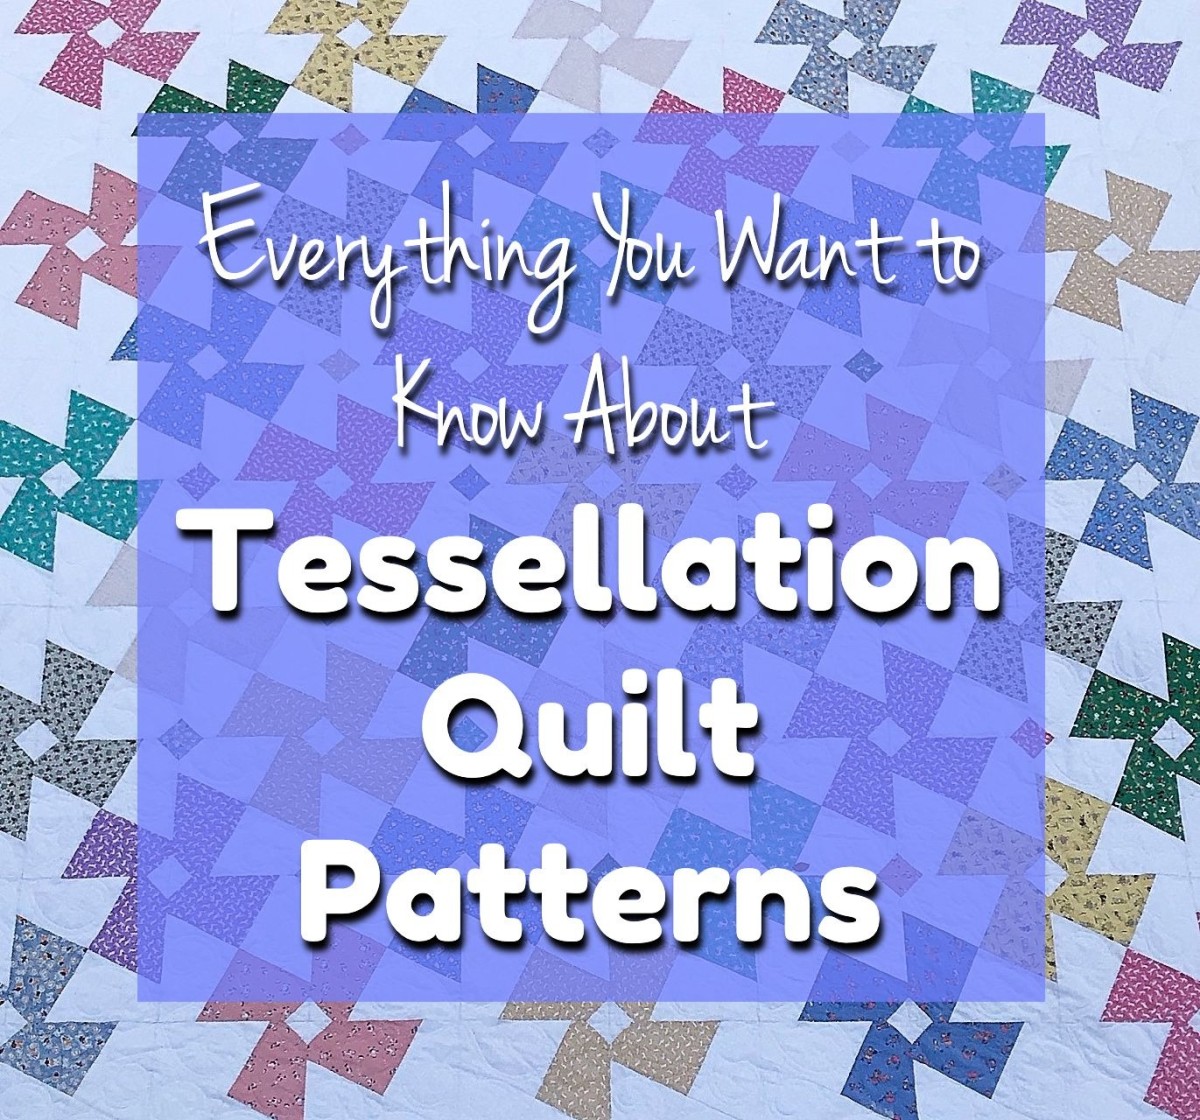 tessellation-quilt-patterns-feltmagnet